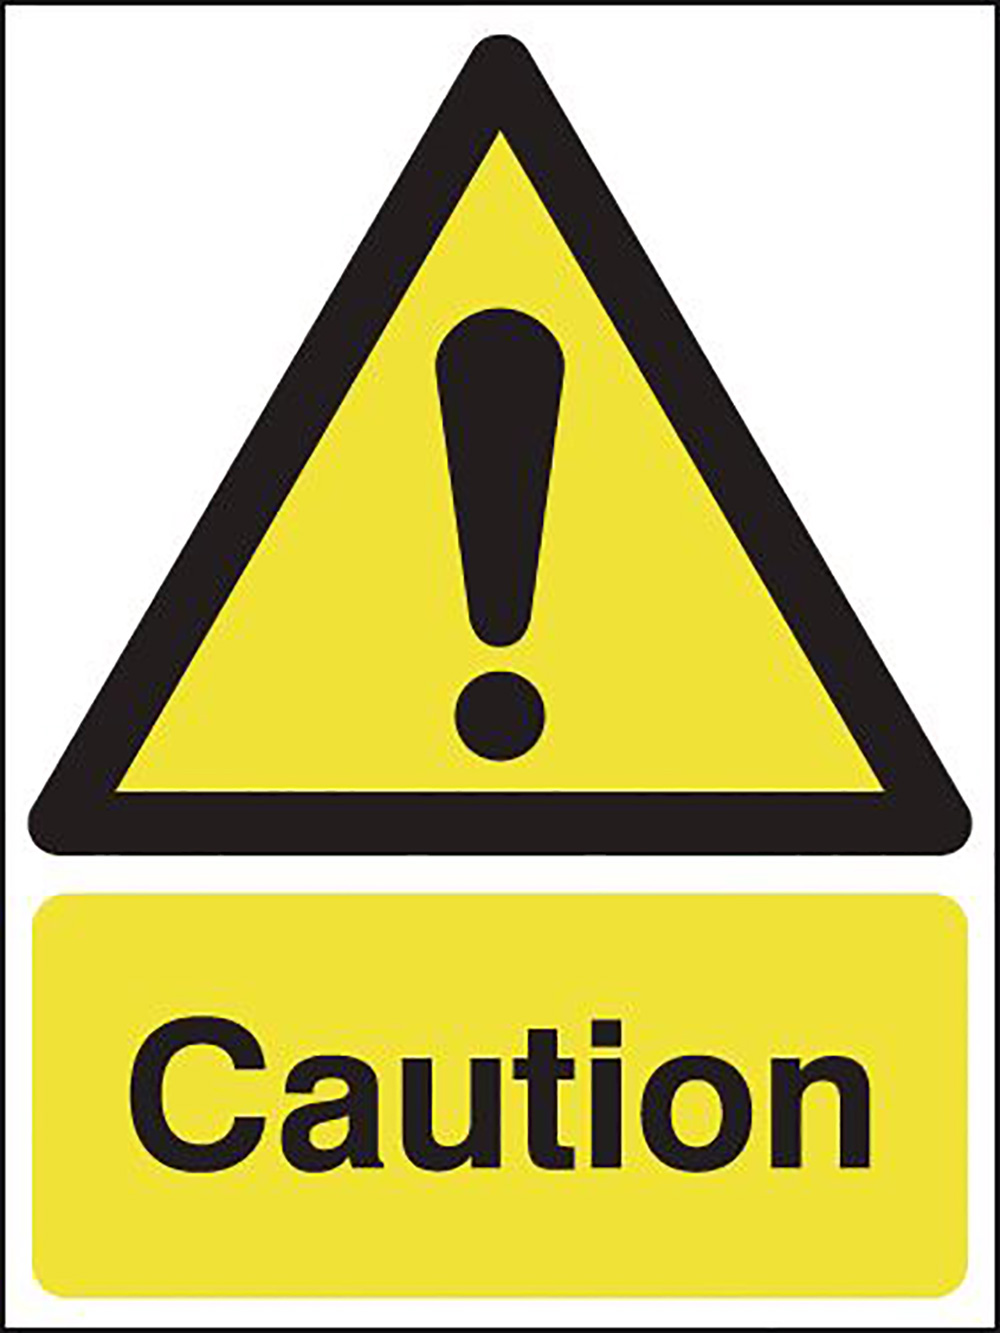 Caution 210x148mm 1.2mm Rigid Plastic Safety Sign  